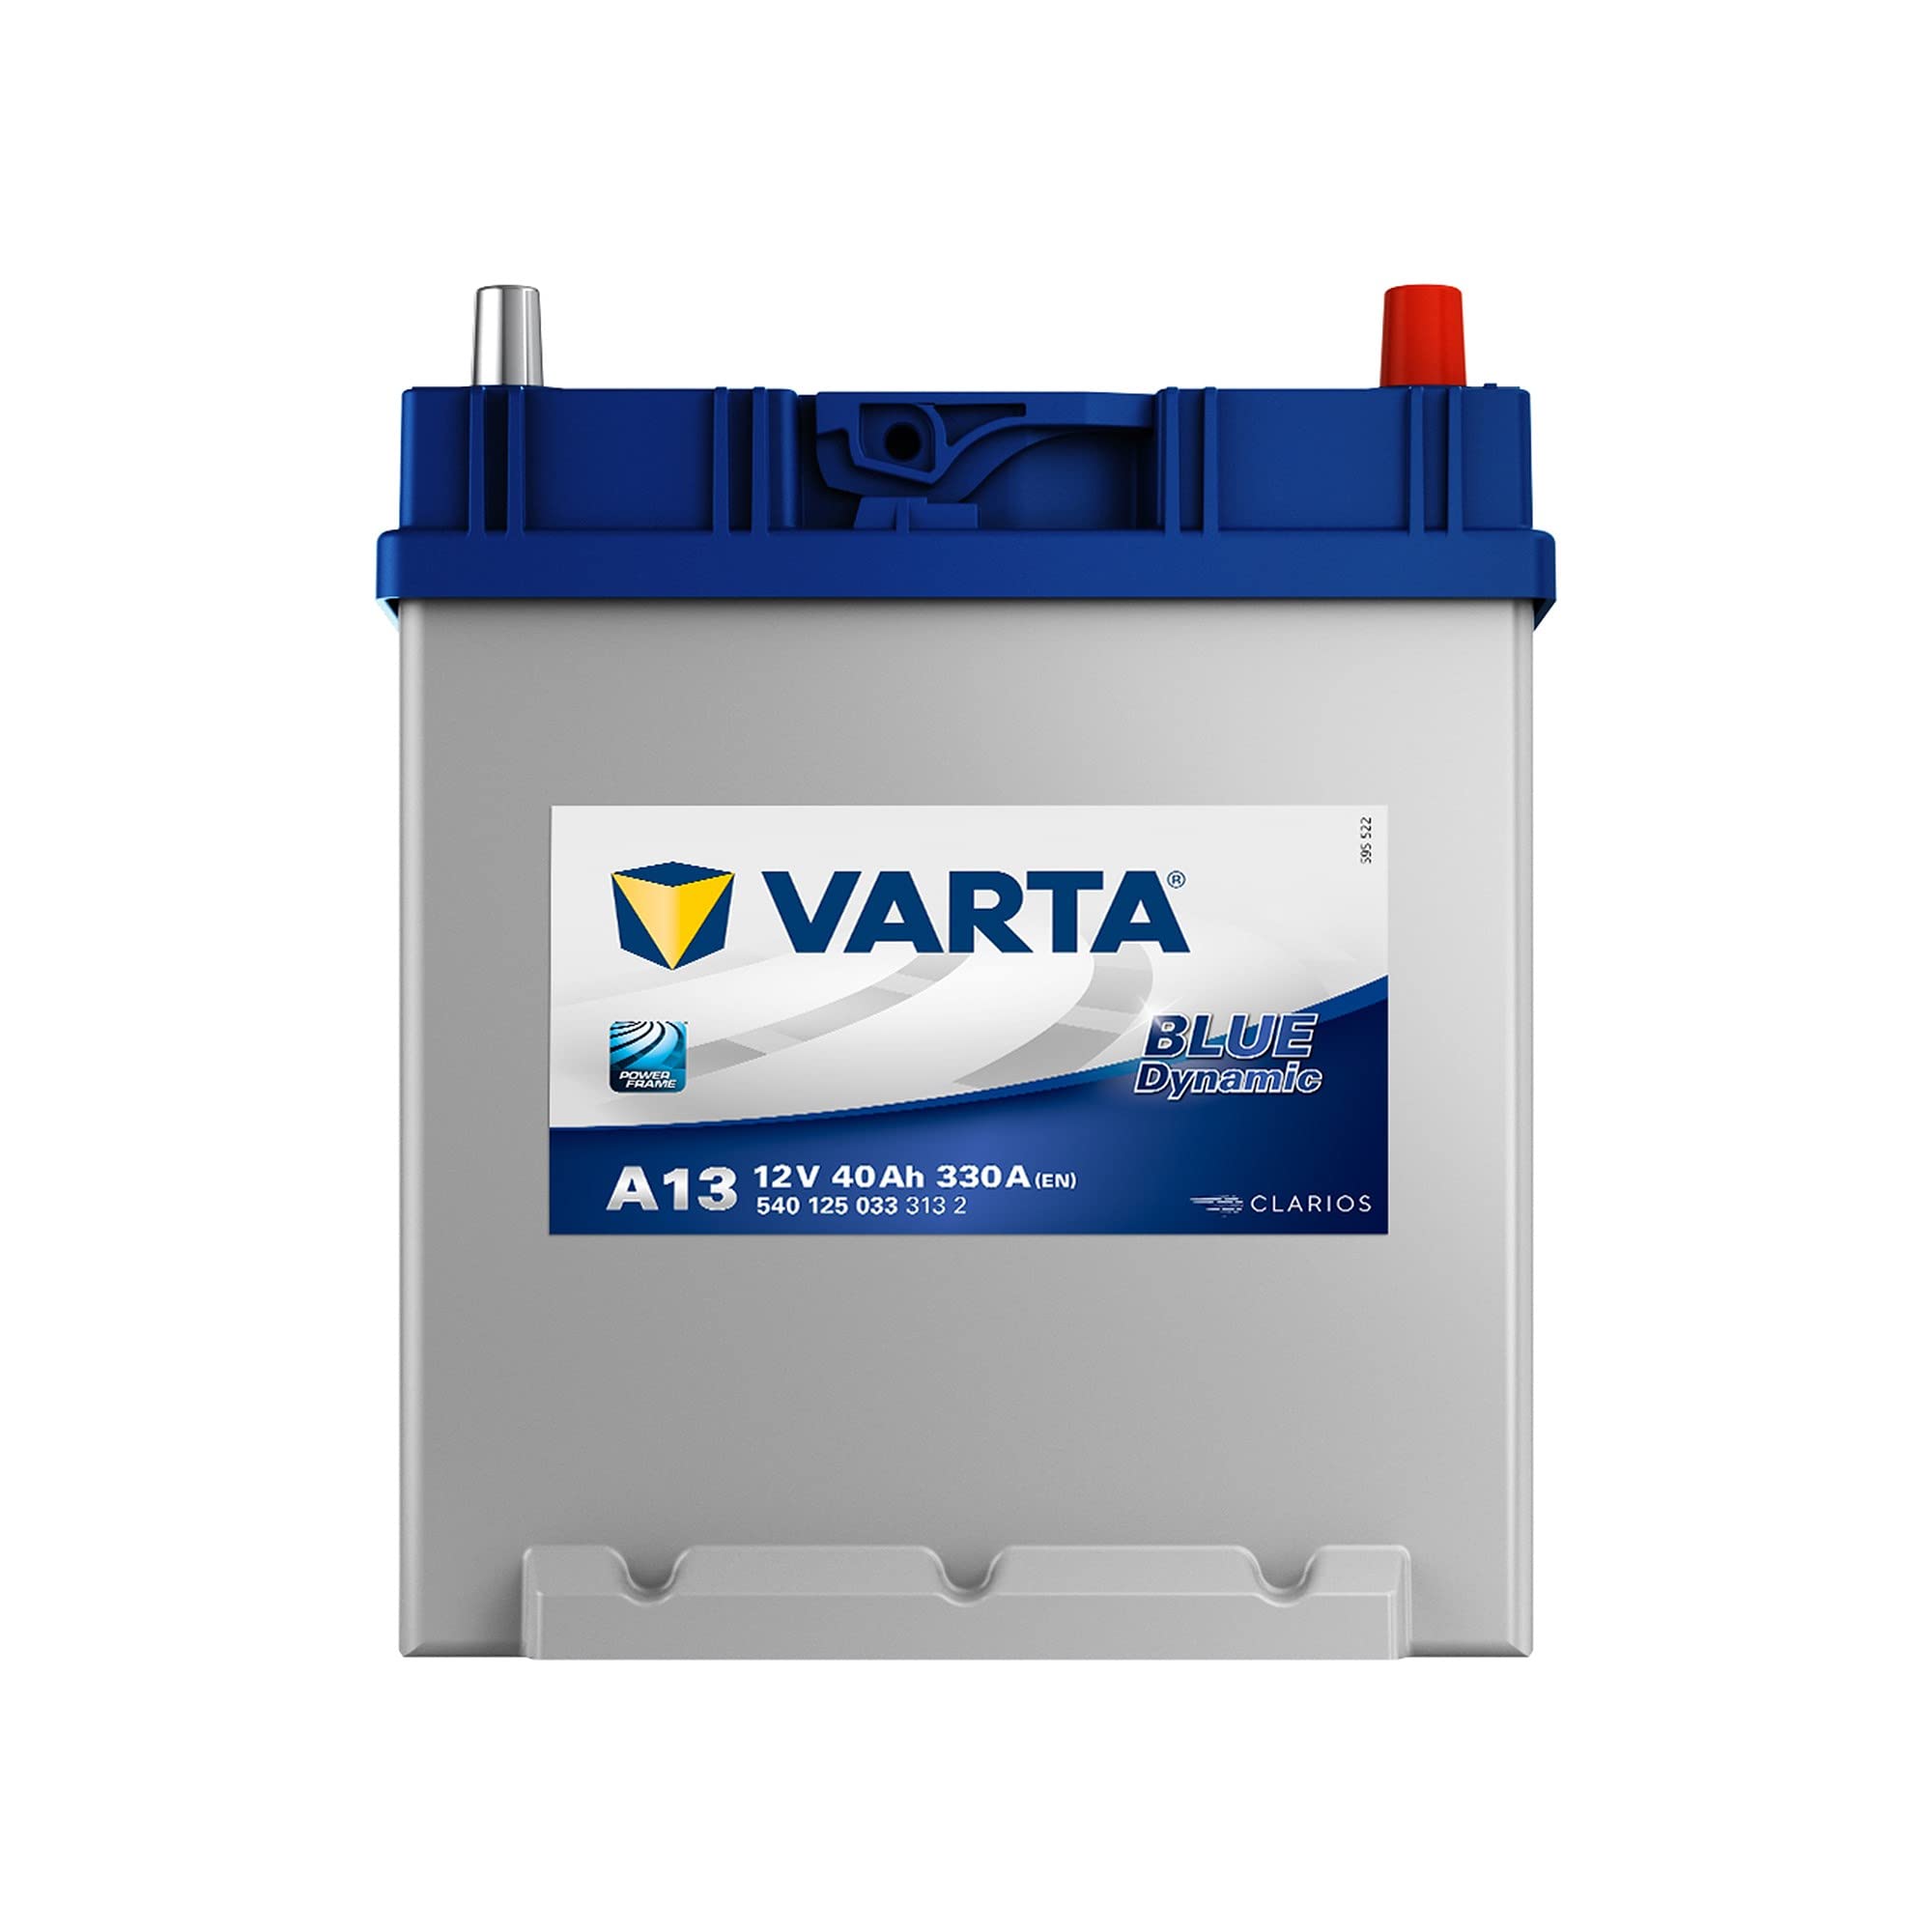 Varta A13 12V 40Ah 330 A(EN) Blue Dynamic Autobatterie ETN 540 125 033